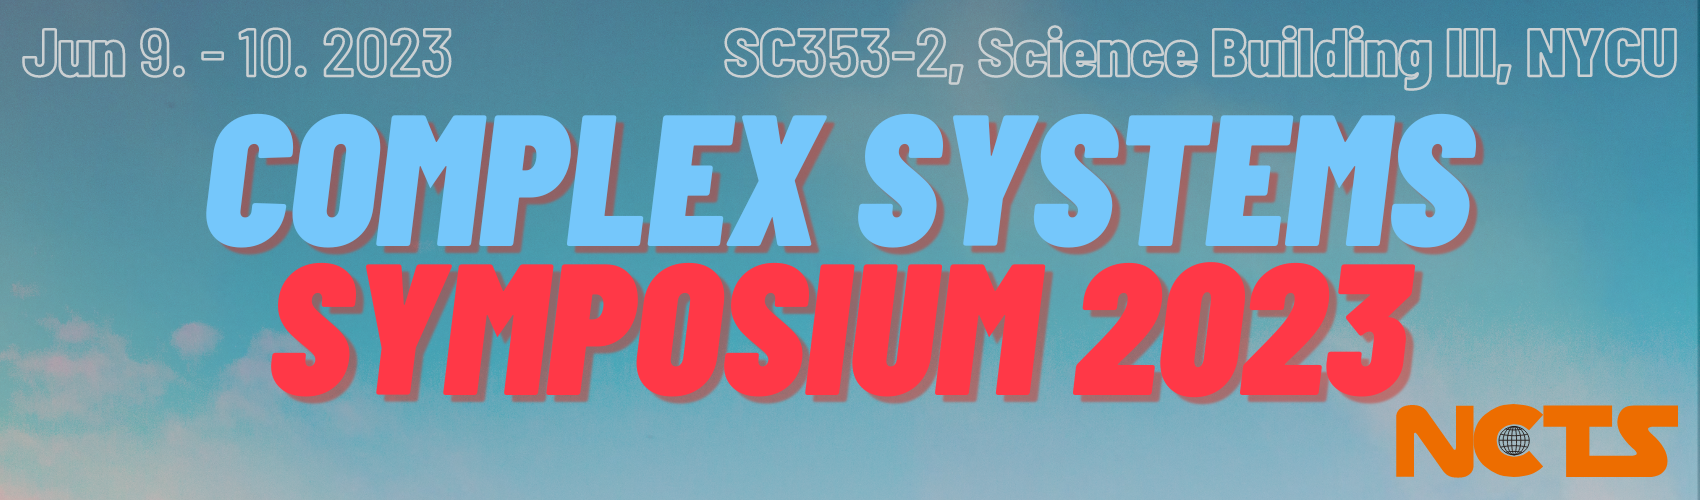 Complex Systems Symposium 2023